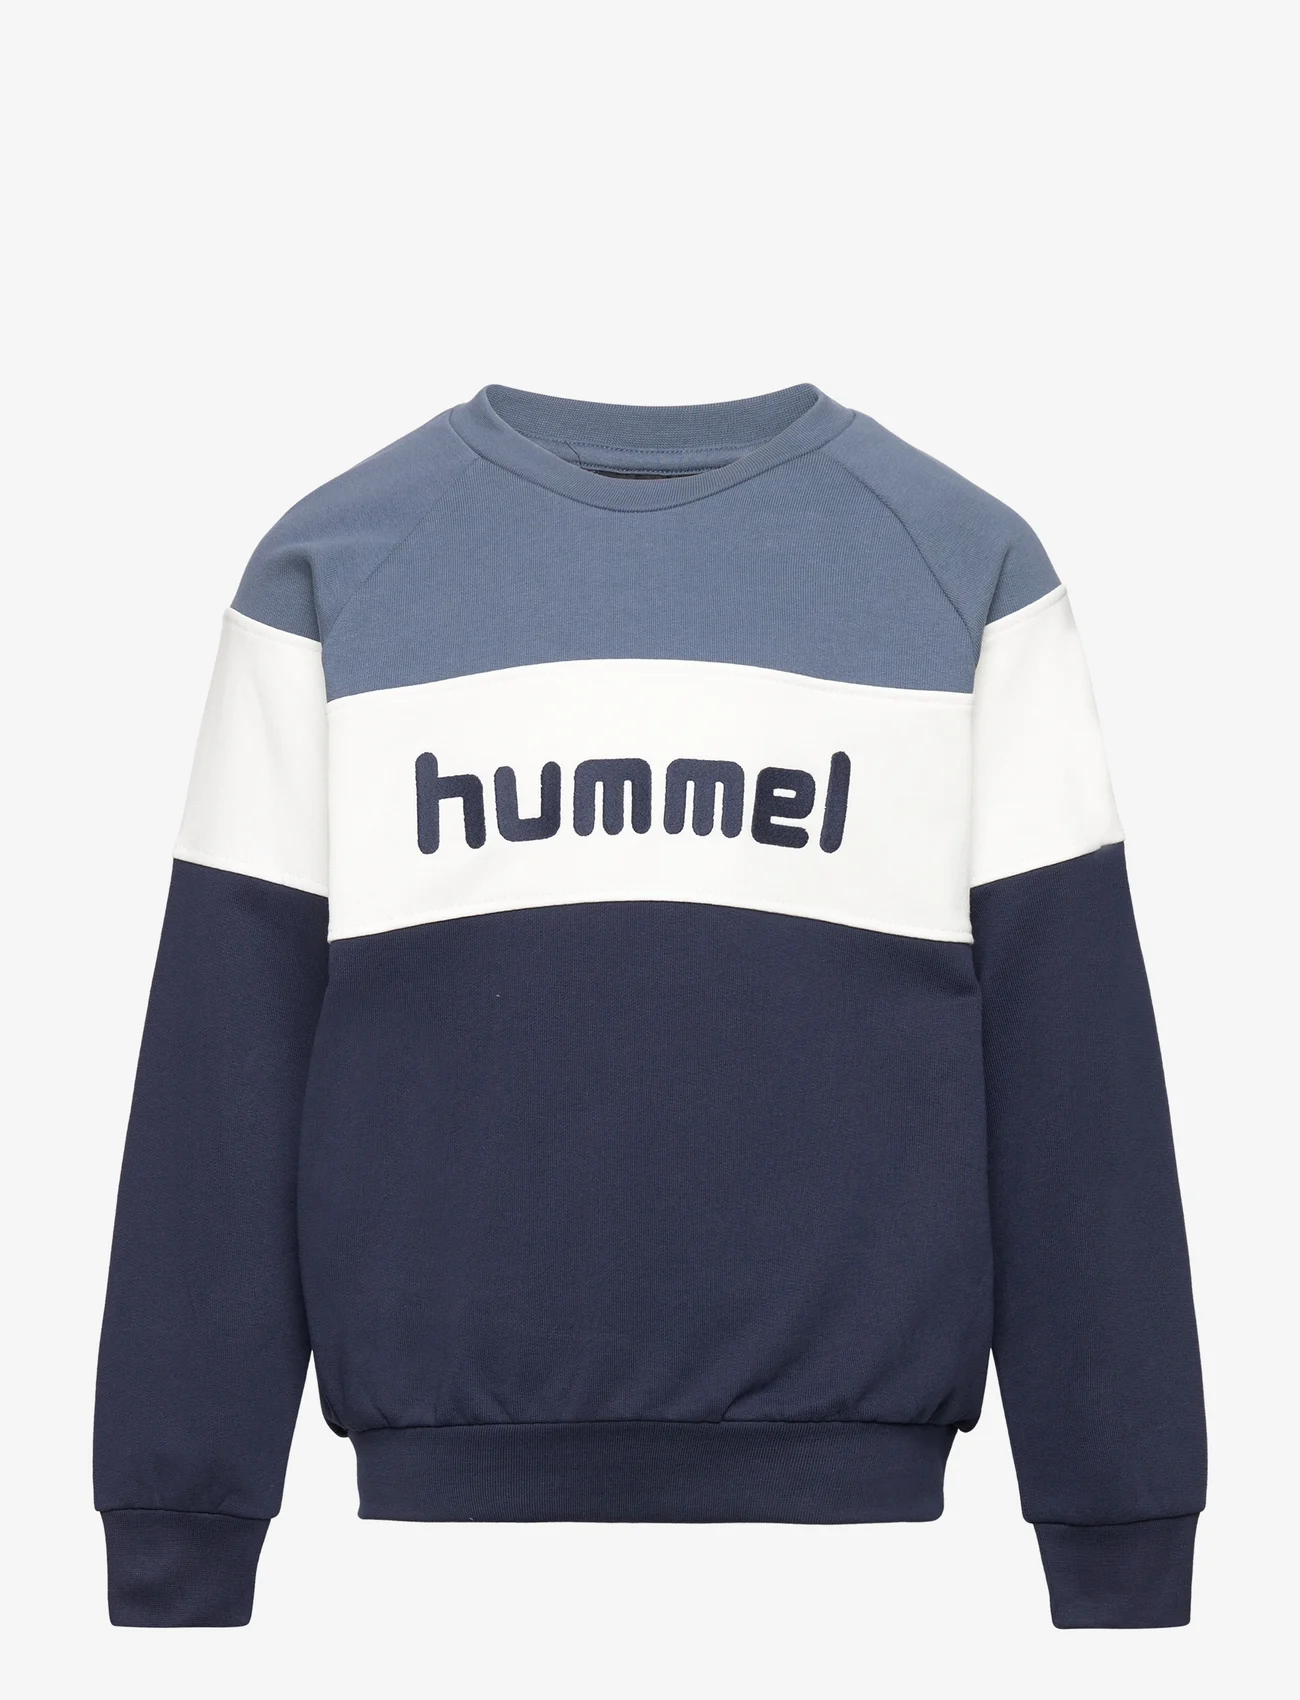 Hummel - hmlCLAES SWEATSHIRT - sweatshirts - bering sea - 0